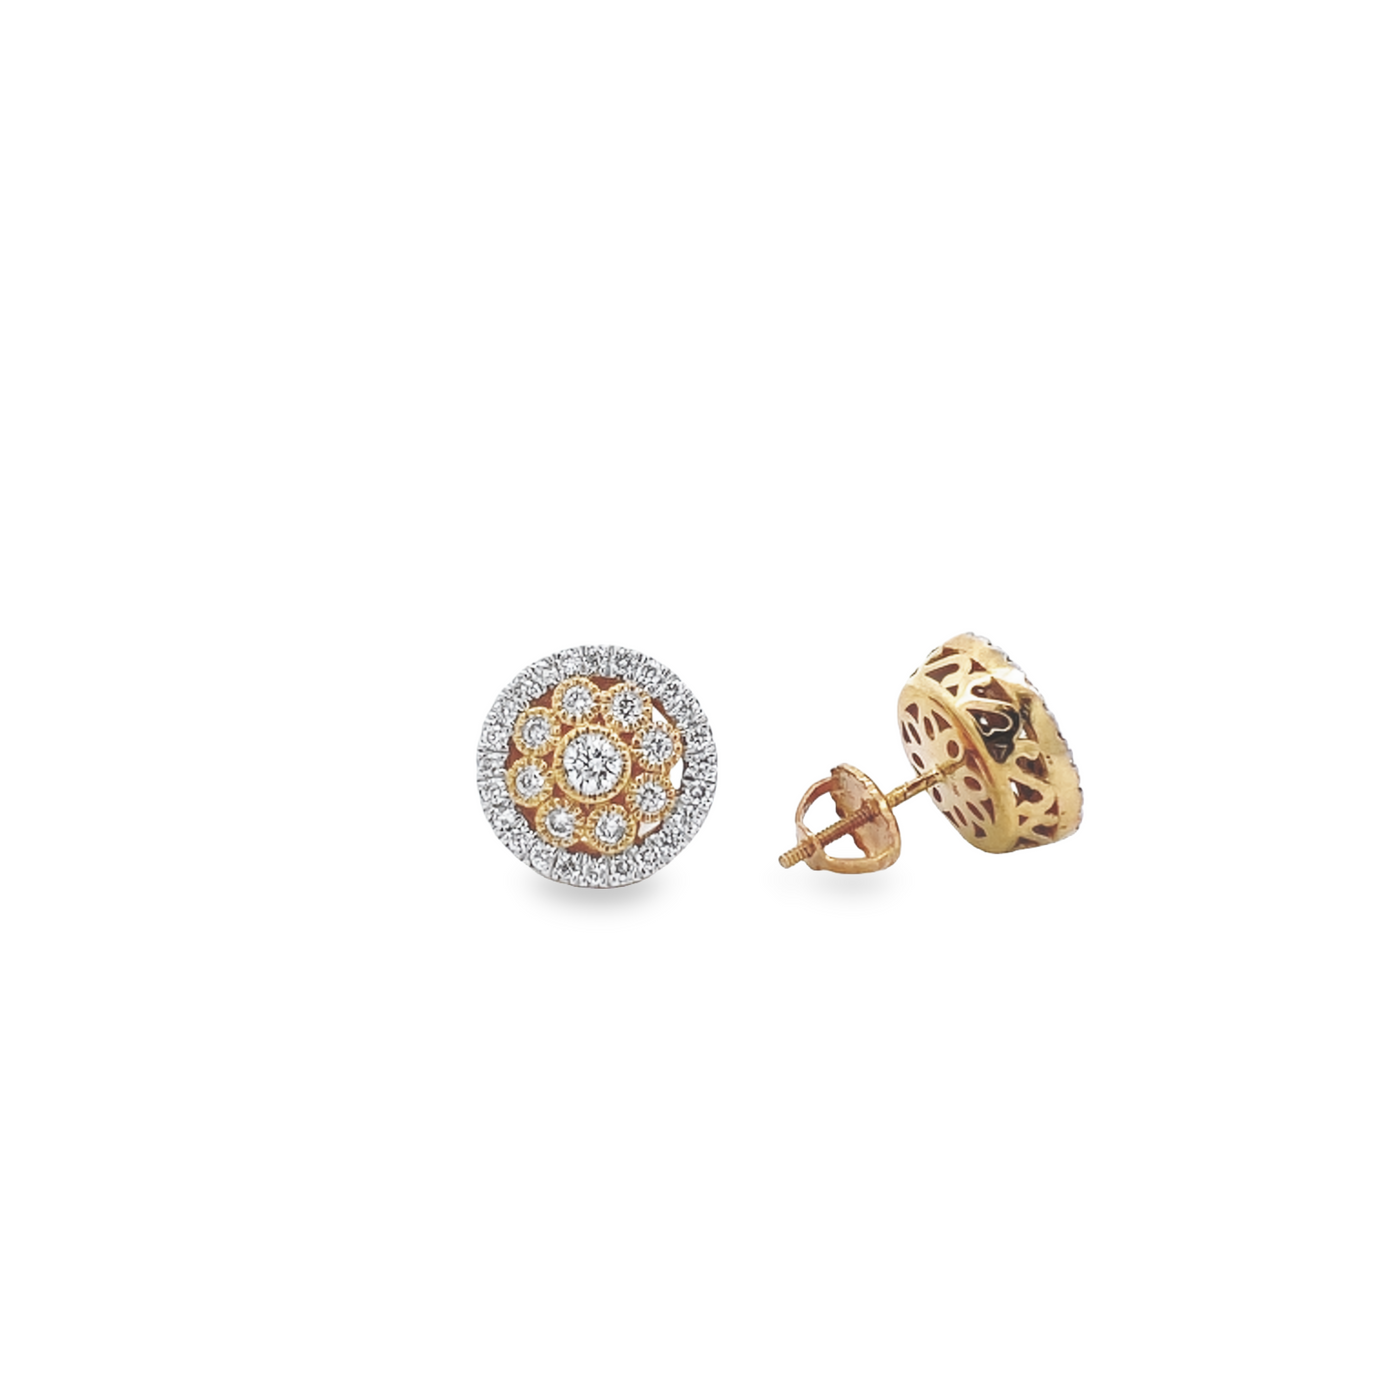 10 Karat Yellow and White Gold Diamond Stud Earrings